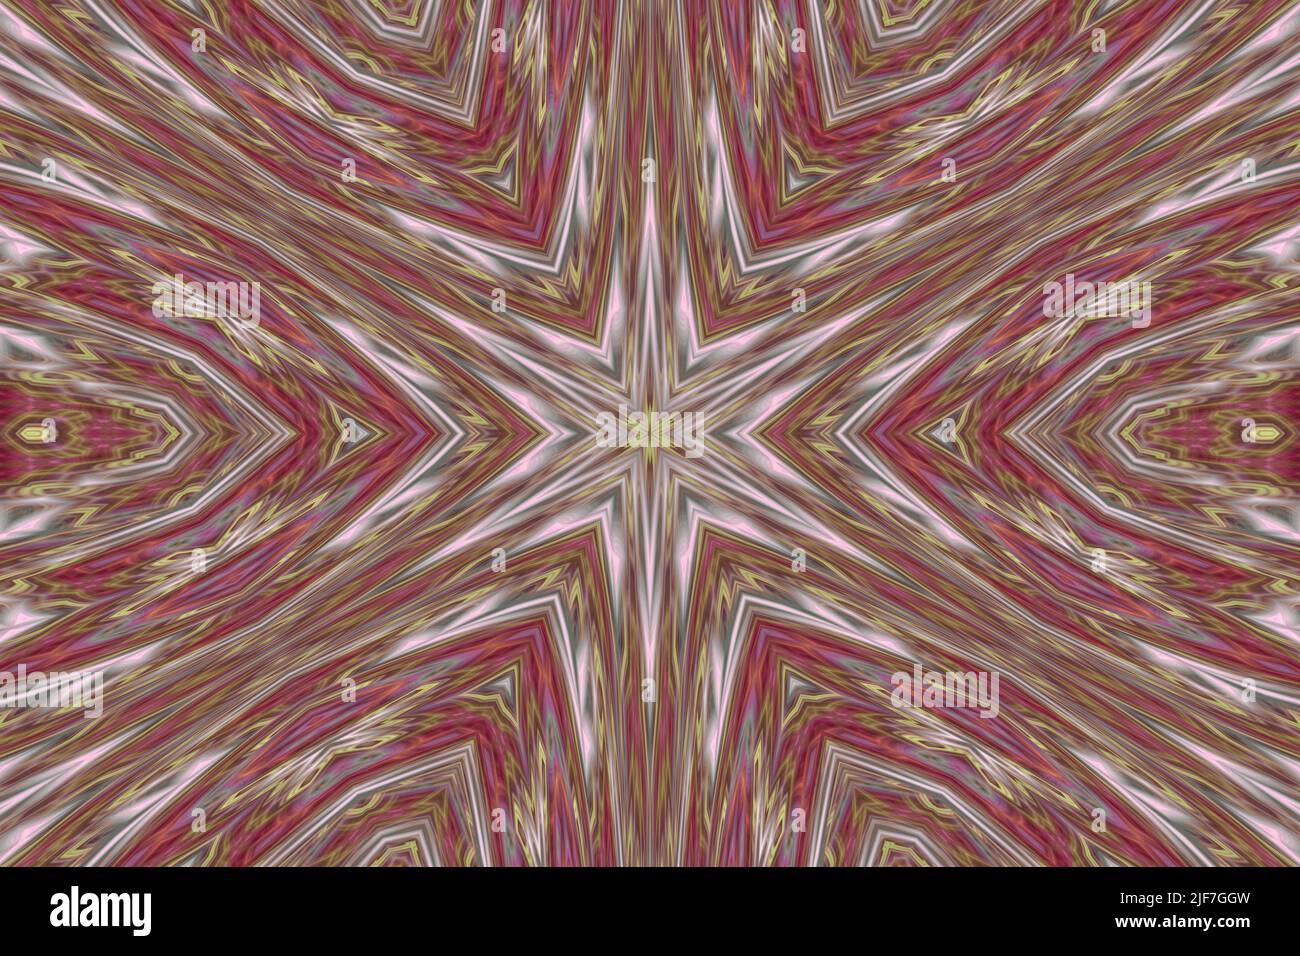 Digital art, 3d illustration. Abstract geometric symmetrical star background Stock Photo